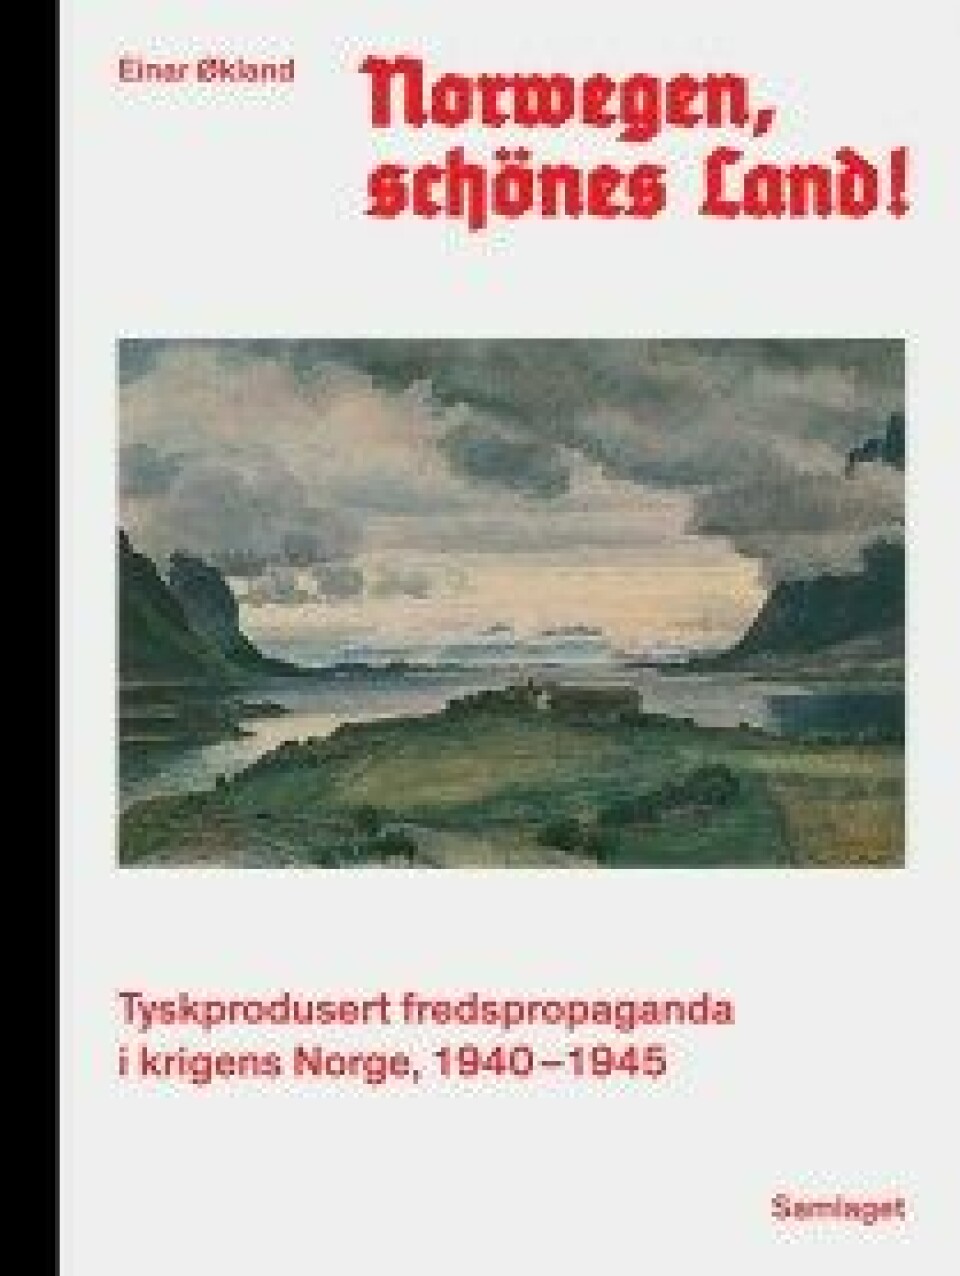 Norwegen, Schönes Land! av Einar Økland (Samlaget, 2017).